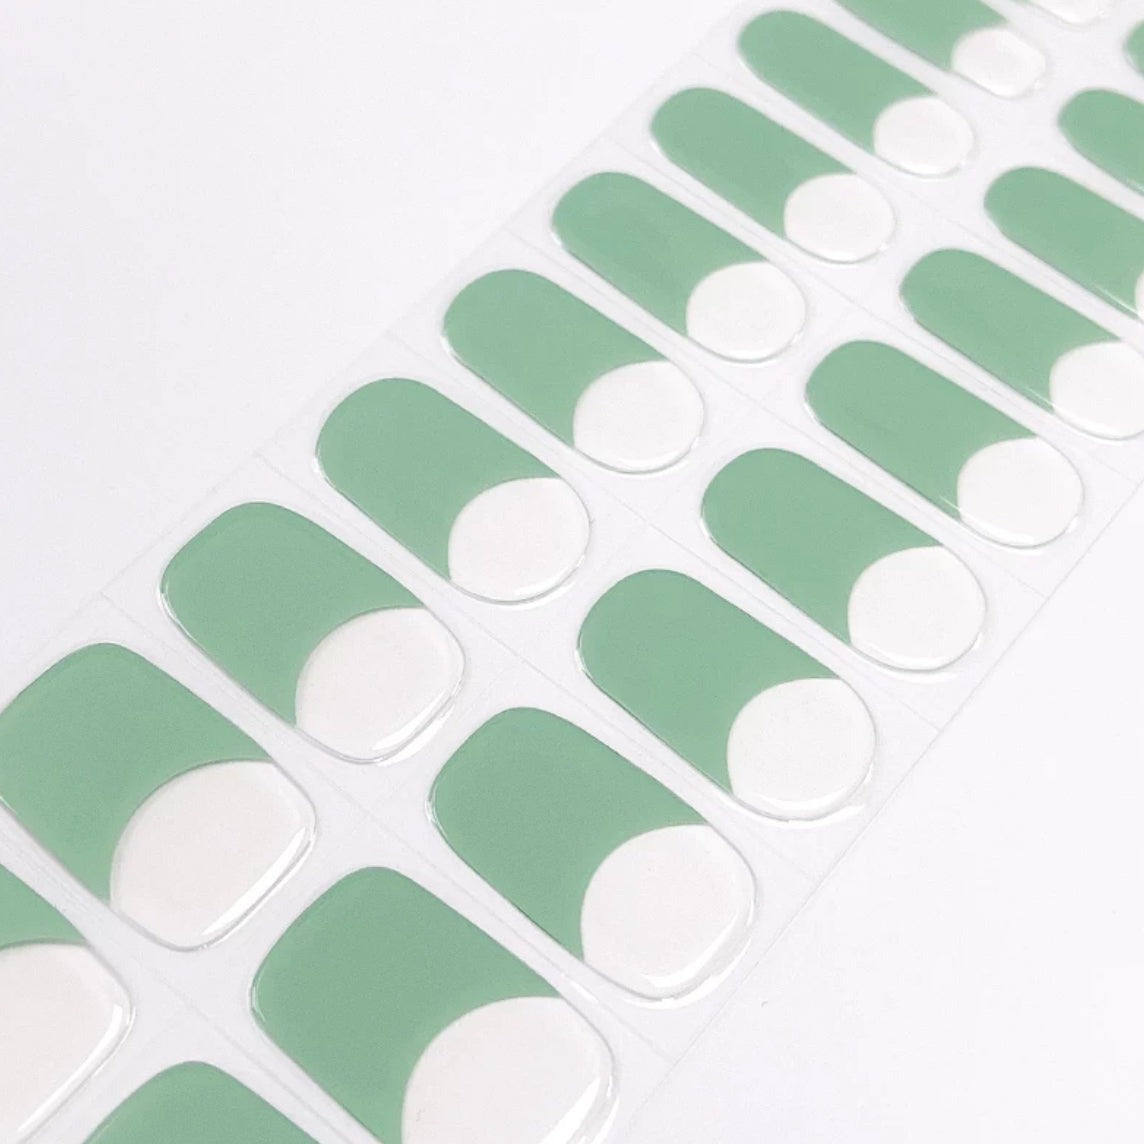 French light green UV gel nail stickers